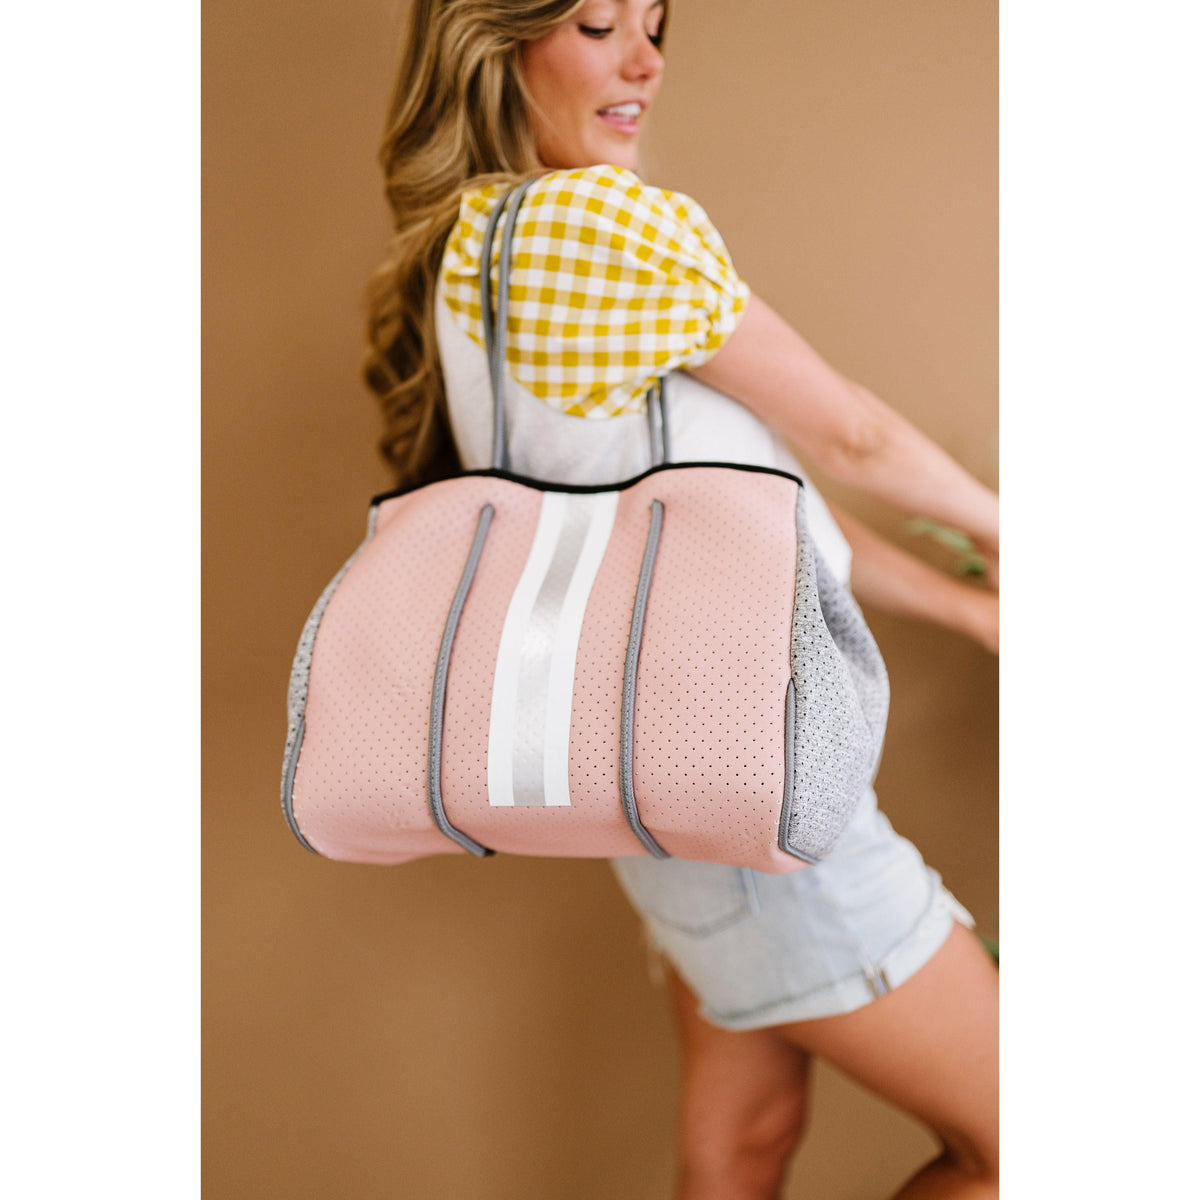 Women's Neoprene Tote Bag | The Classy Cloth - becauseofadi